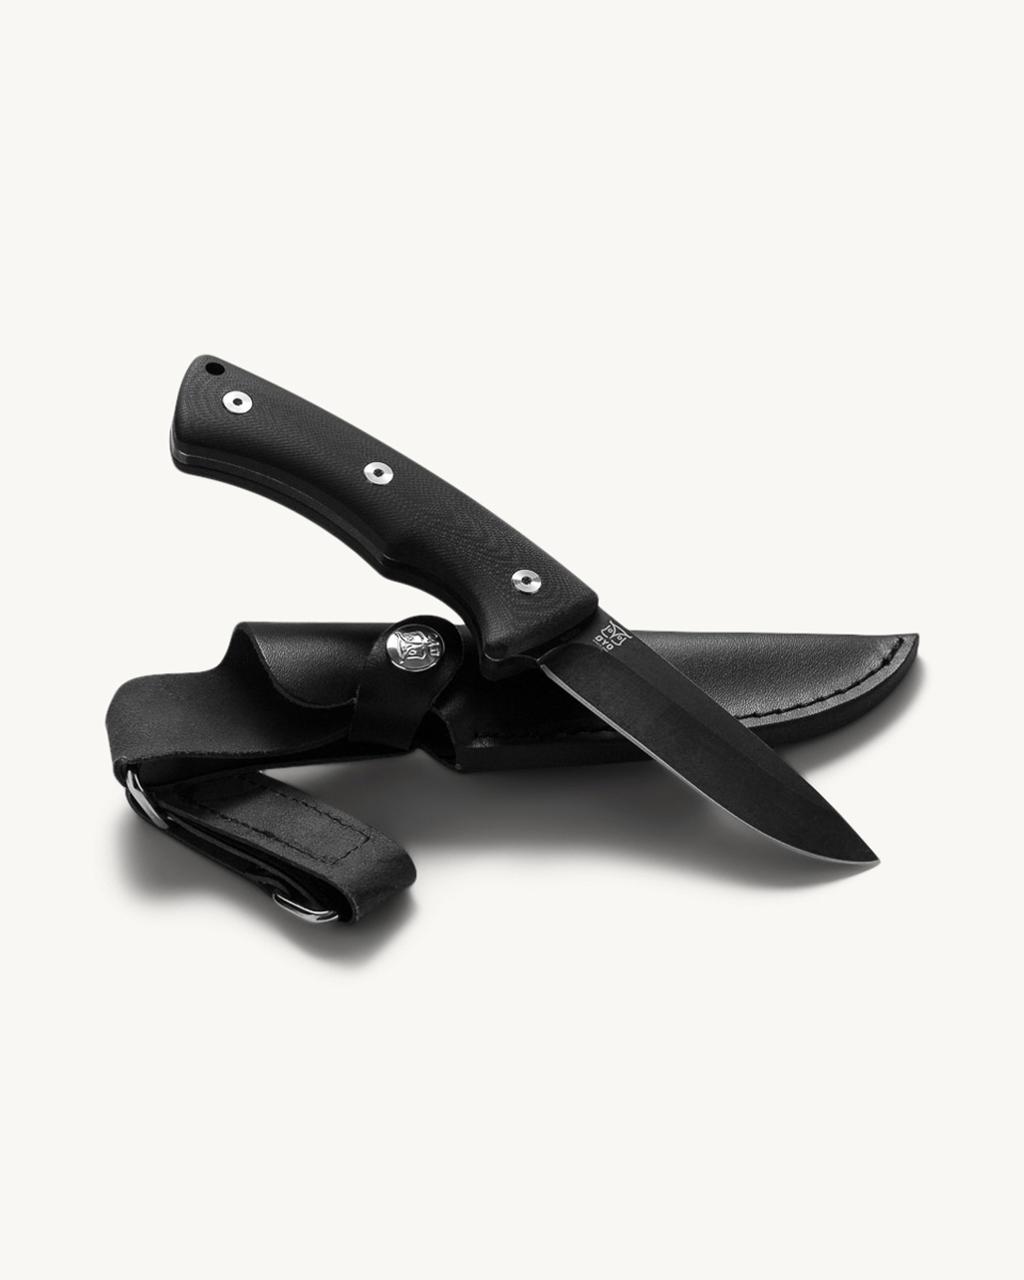 Falketind Black knife w/leather sheath